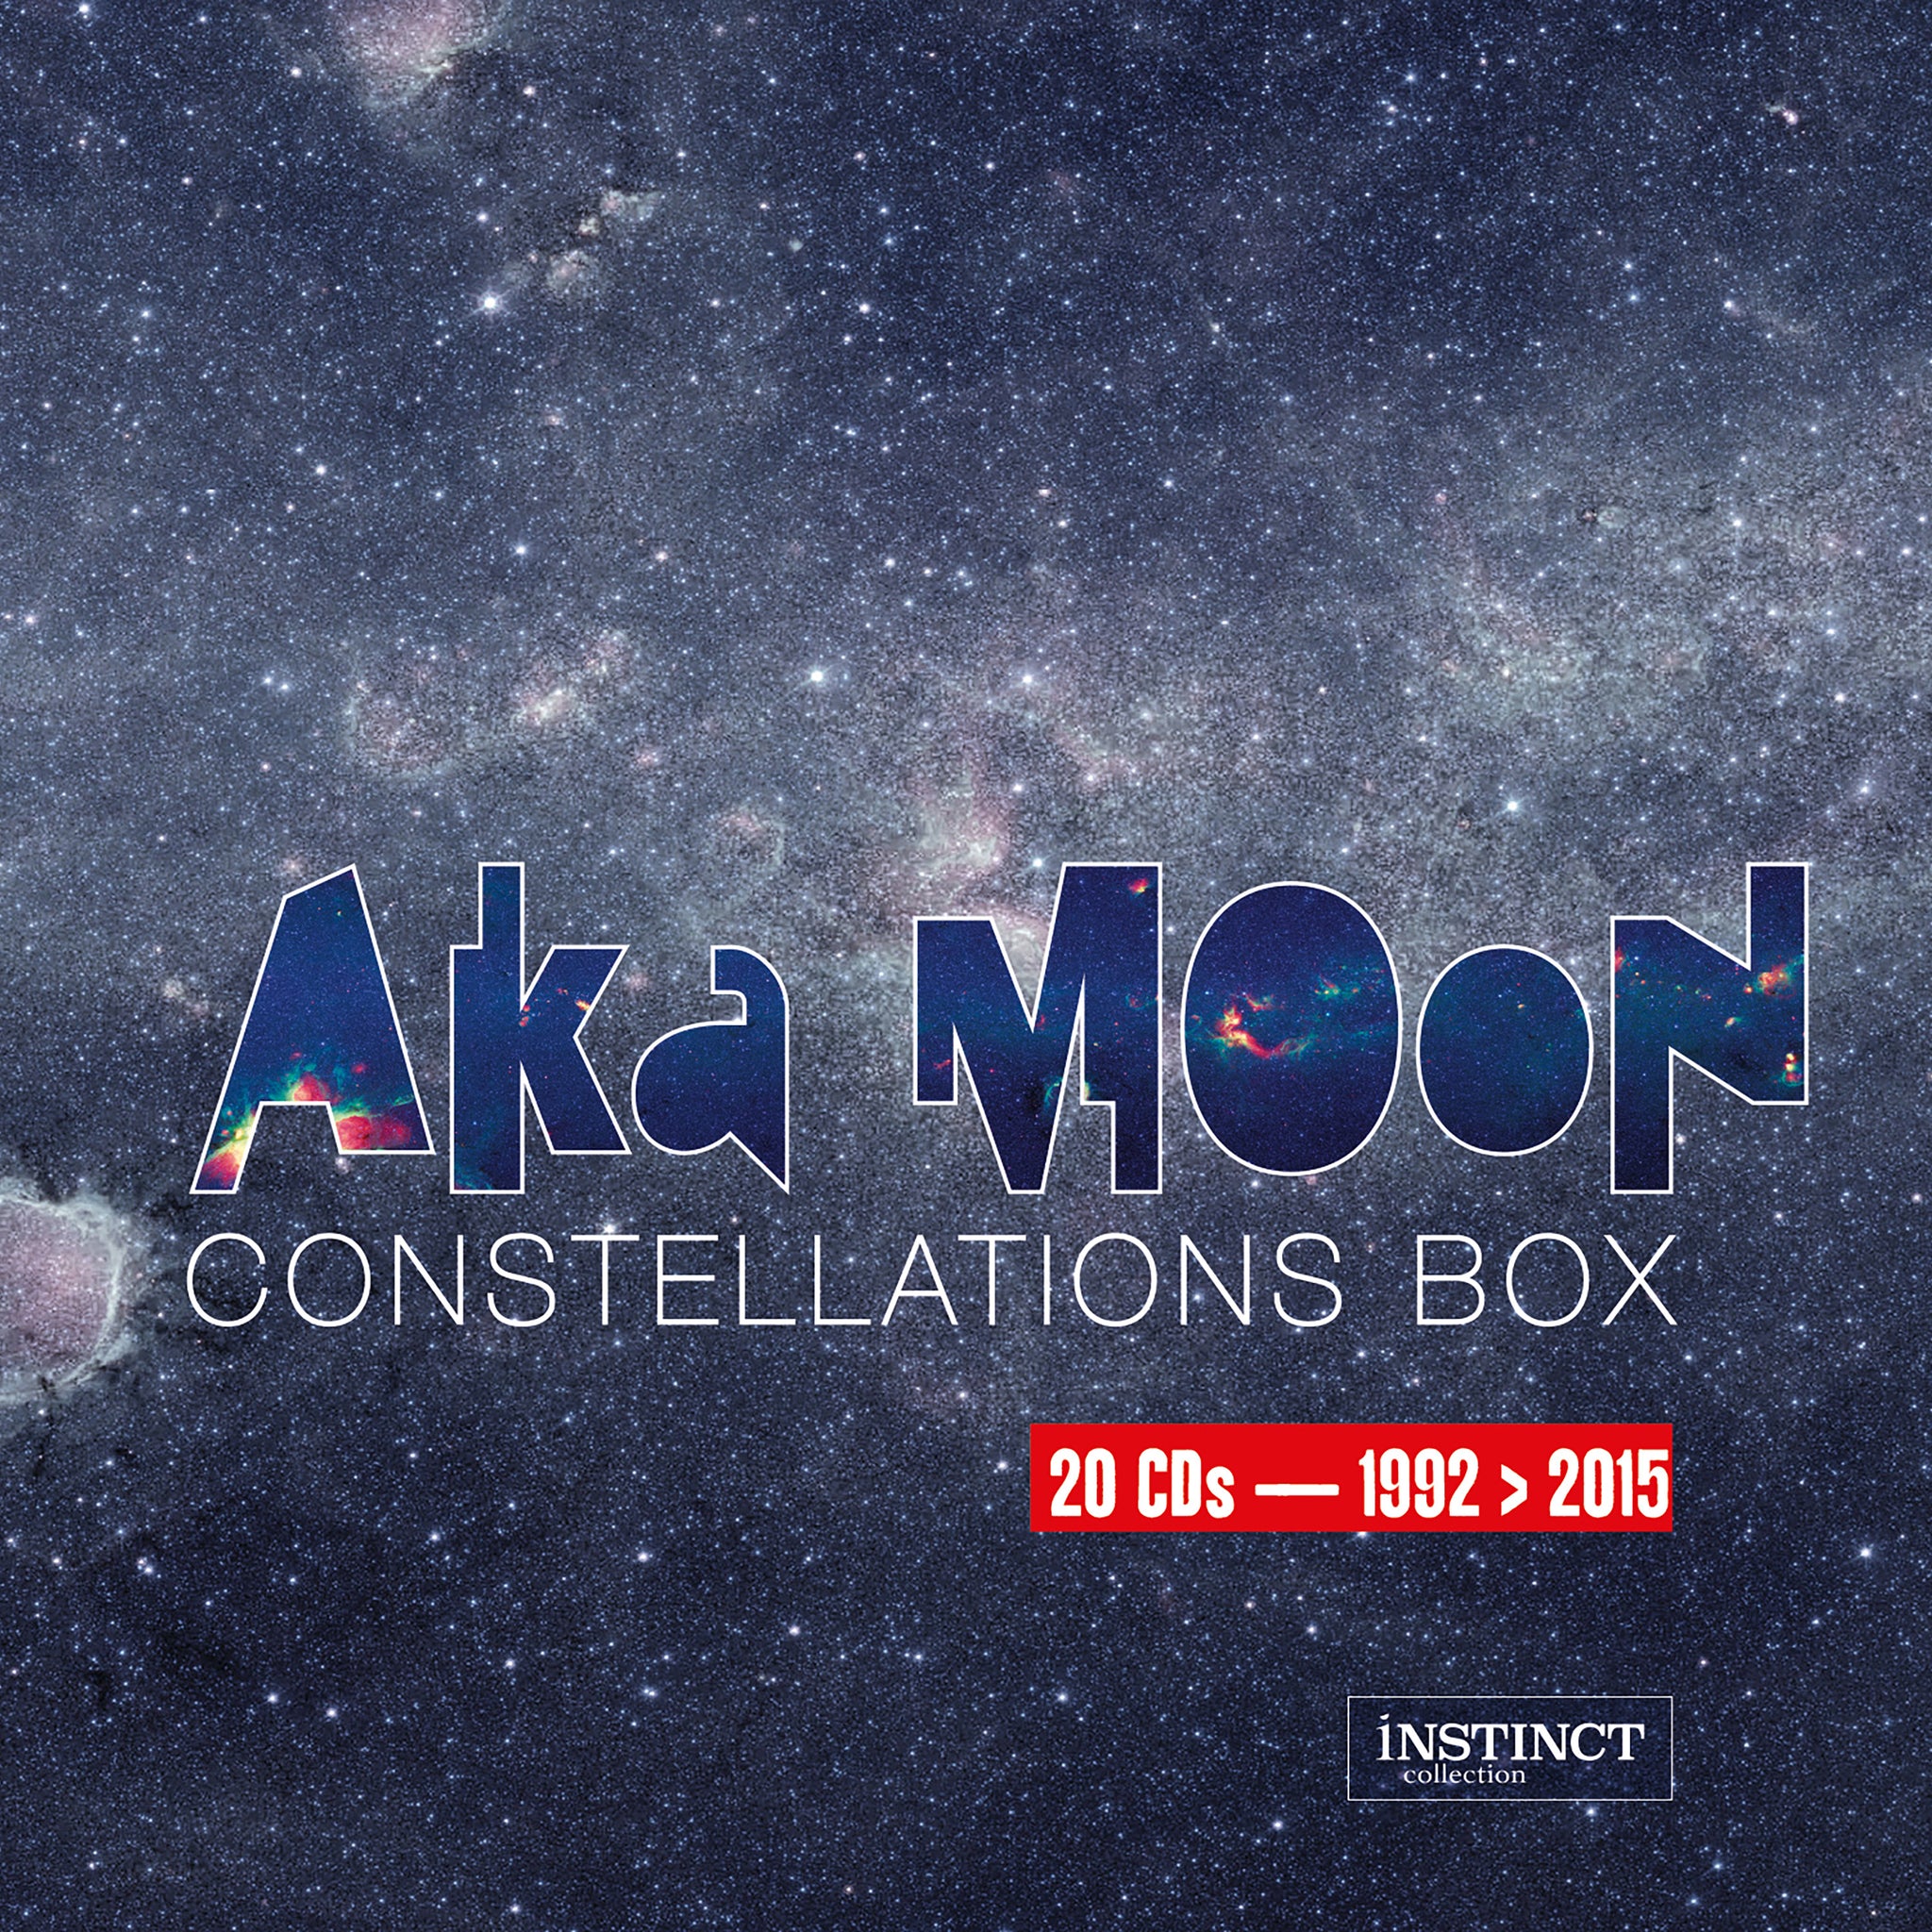 Constellations Box [20 CDs] / Aka Moon